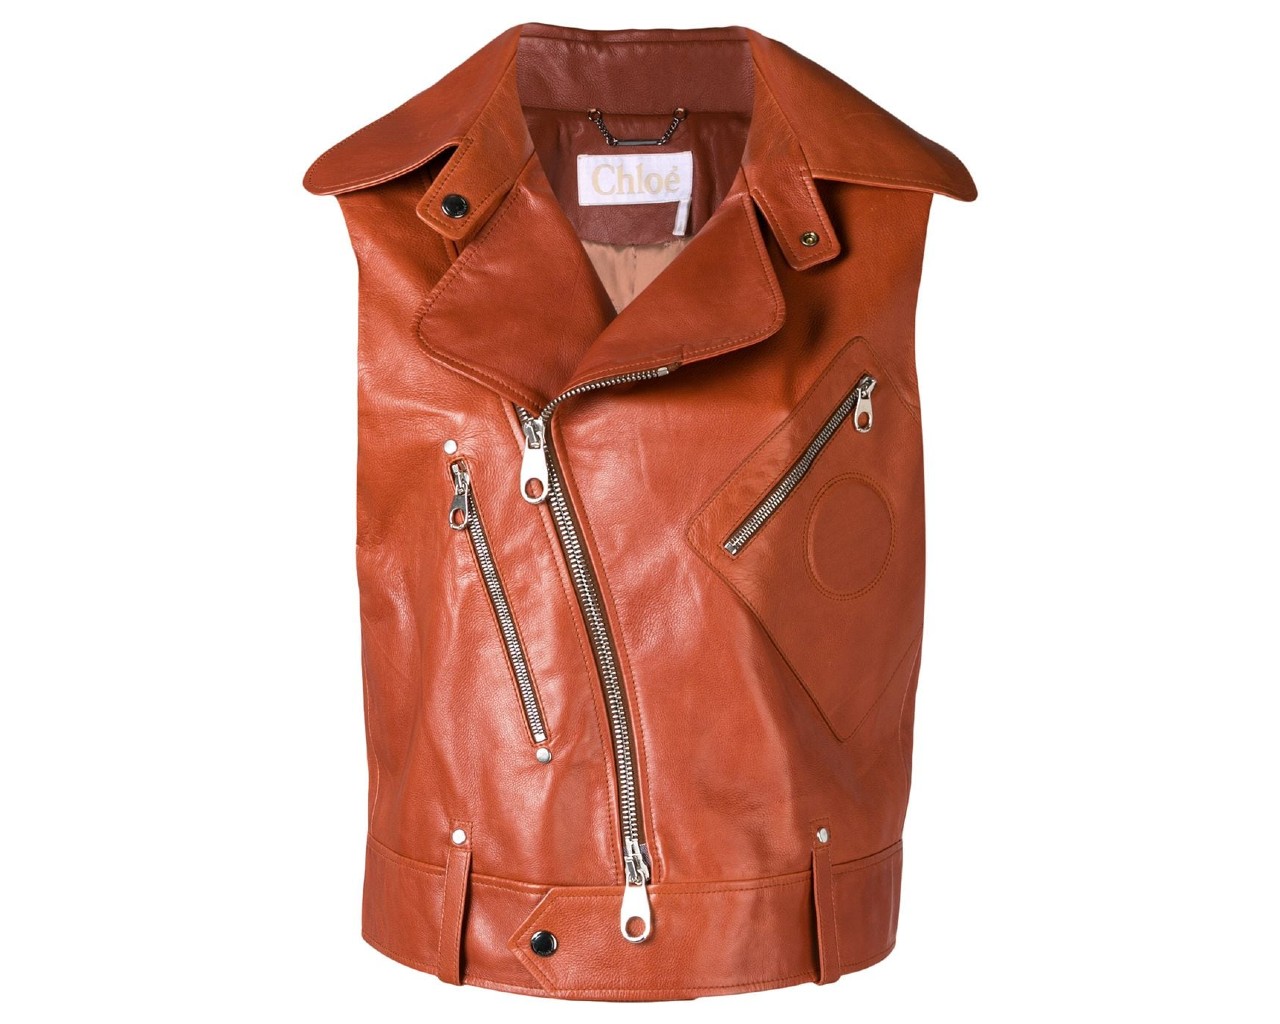 Chloe Asymmetrical Vest, inspired by Bella Hadid's brown leather vest